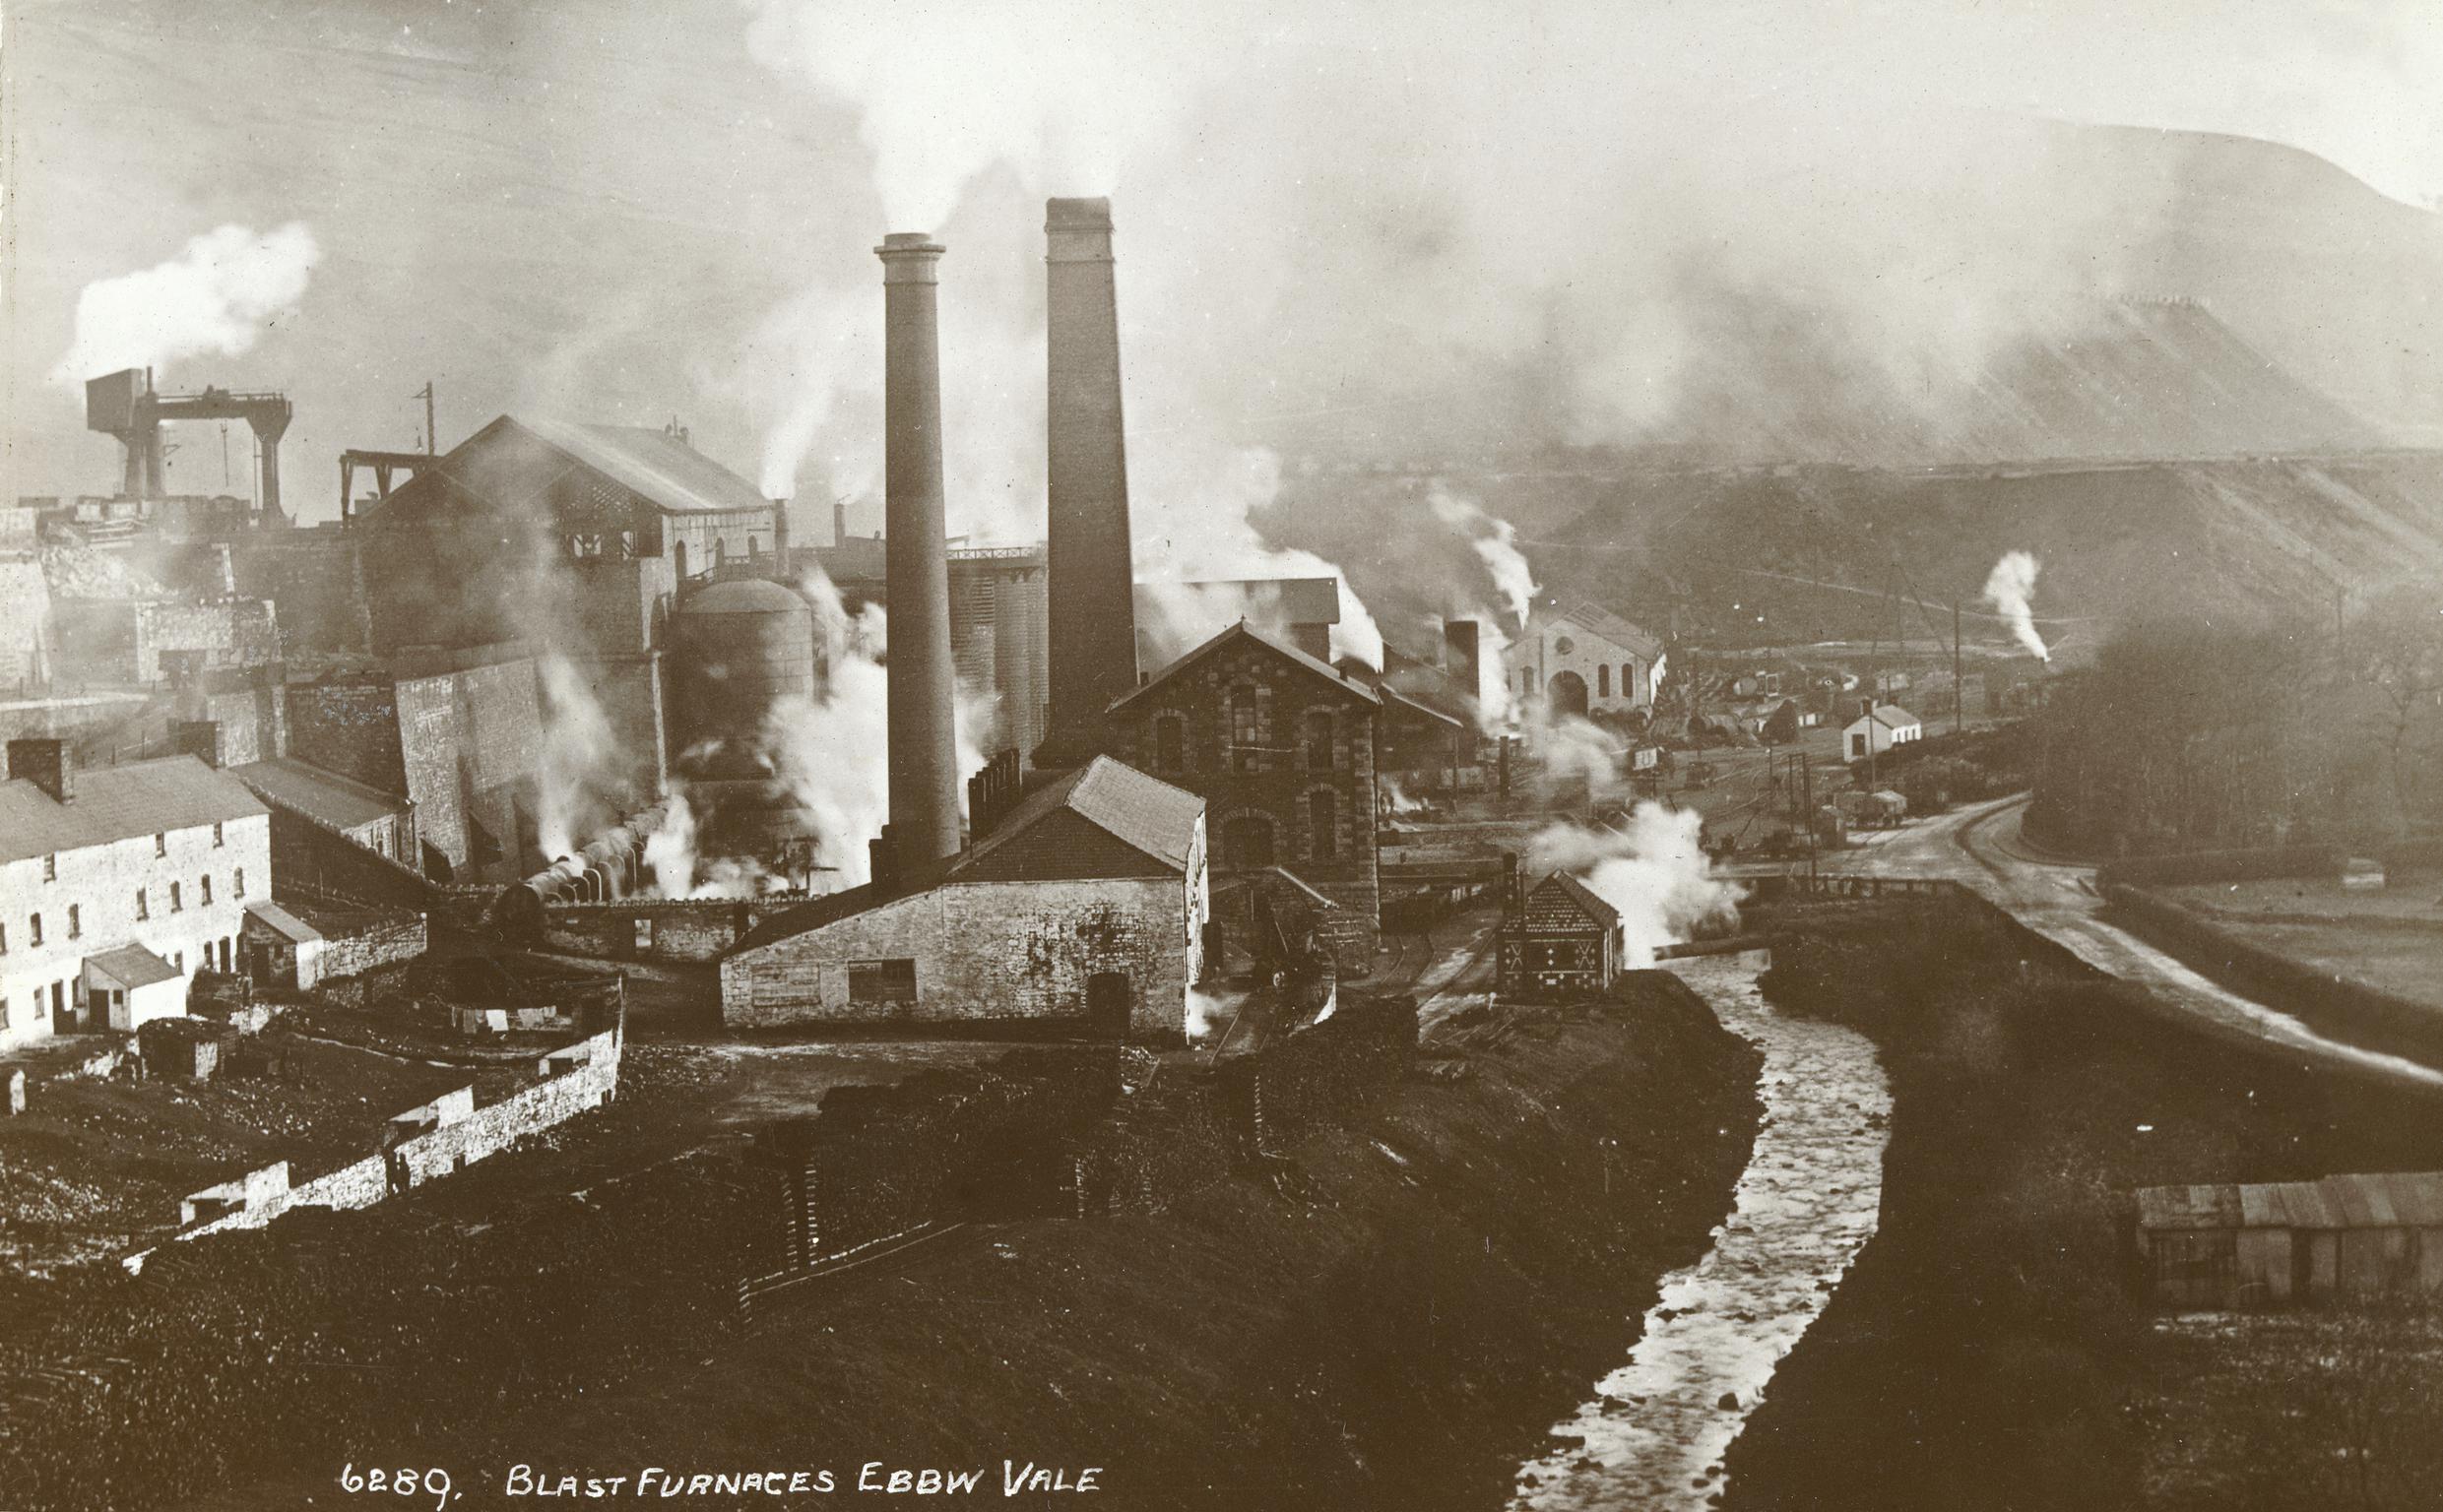 6289 Blast Furnaces Ebbw Vale (postcard)